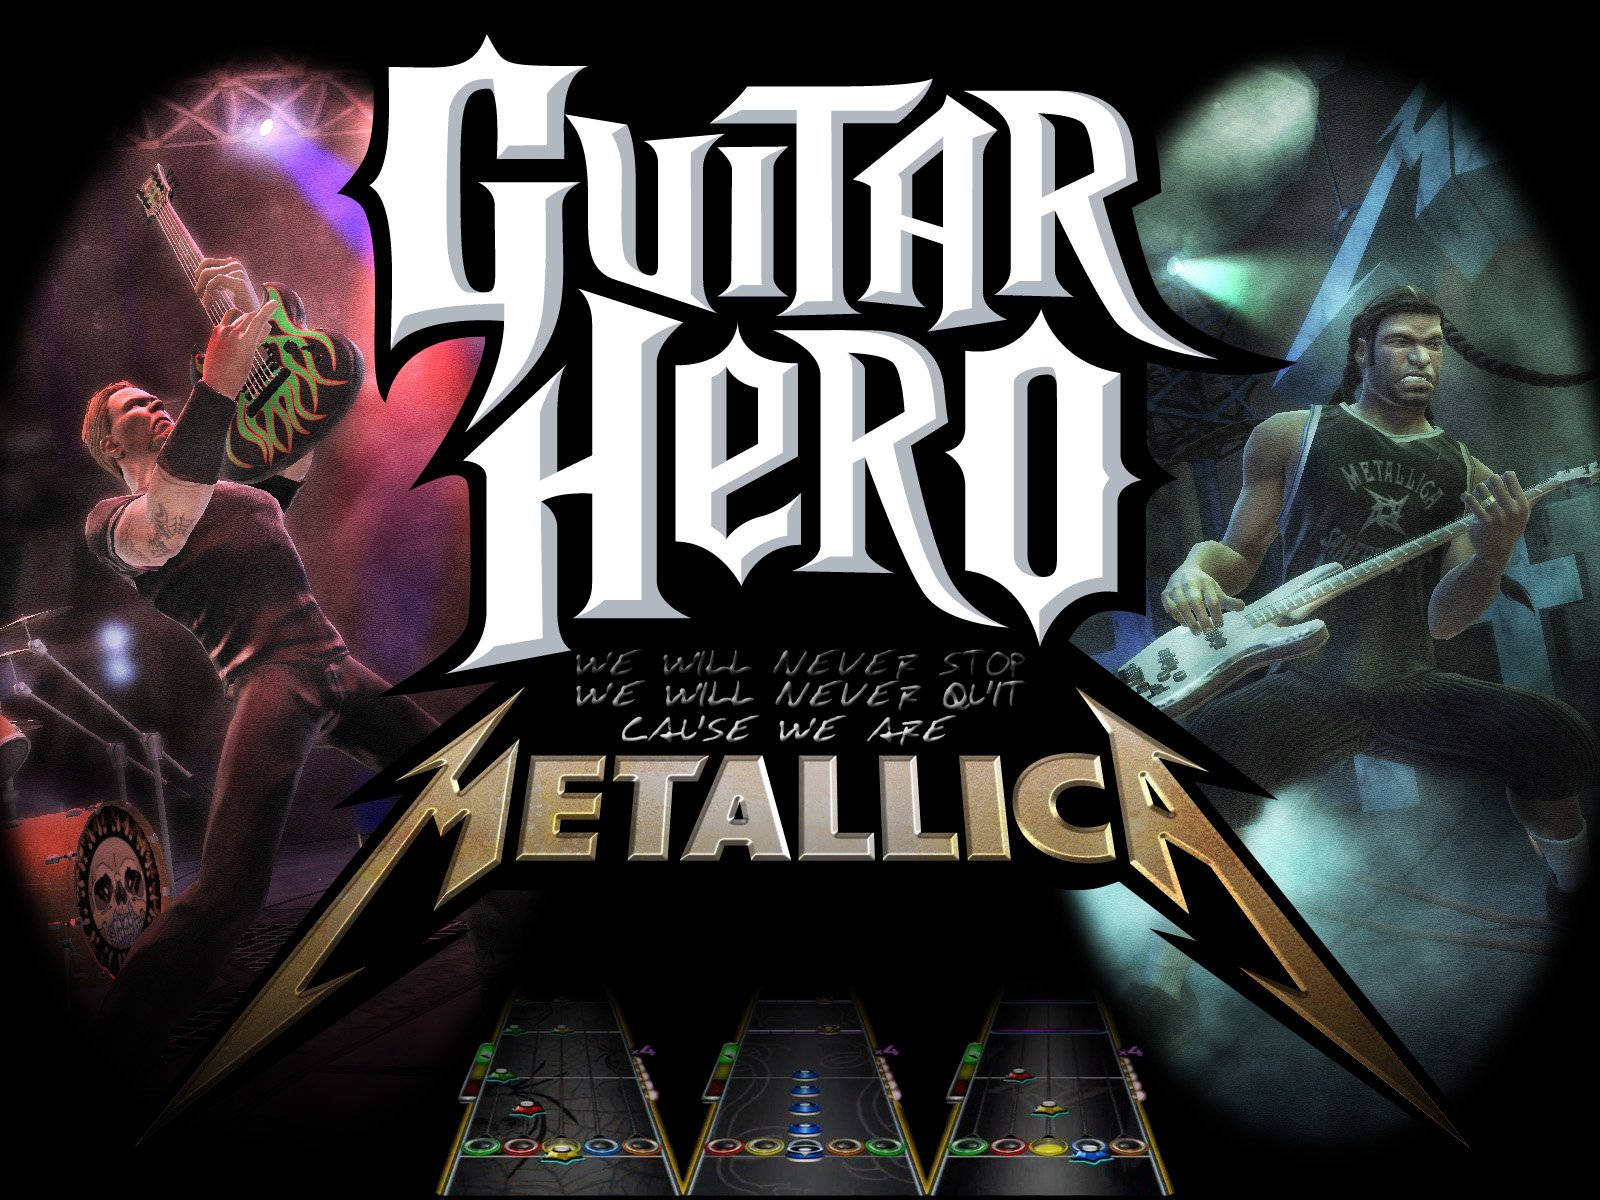 Guitar Hero Metallica Digital Poster Background